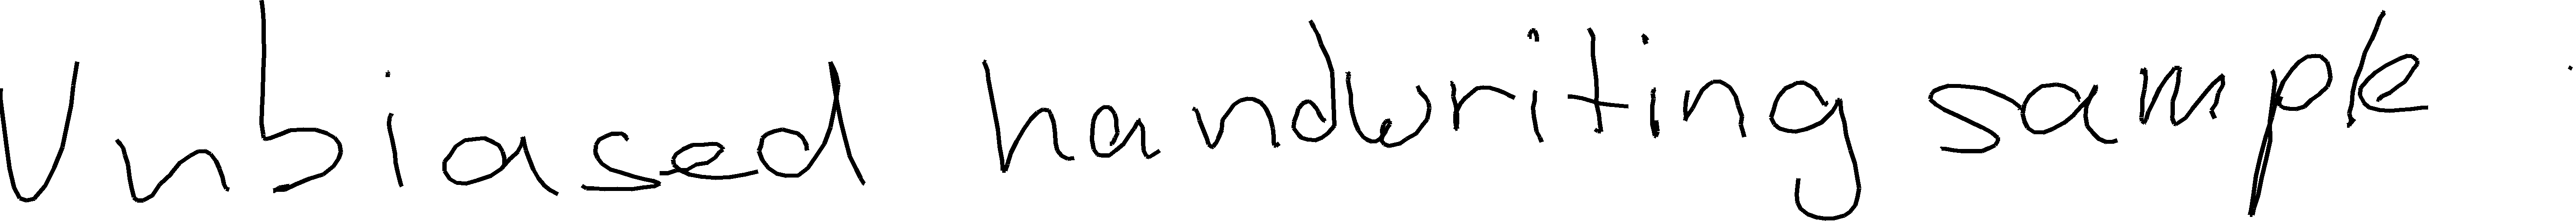 Unbiased_handwriting_sample__3.png